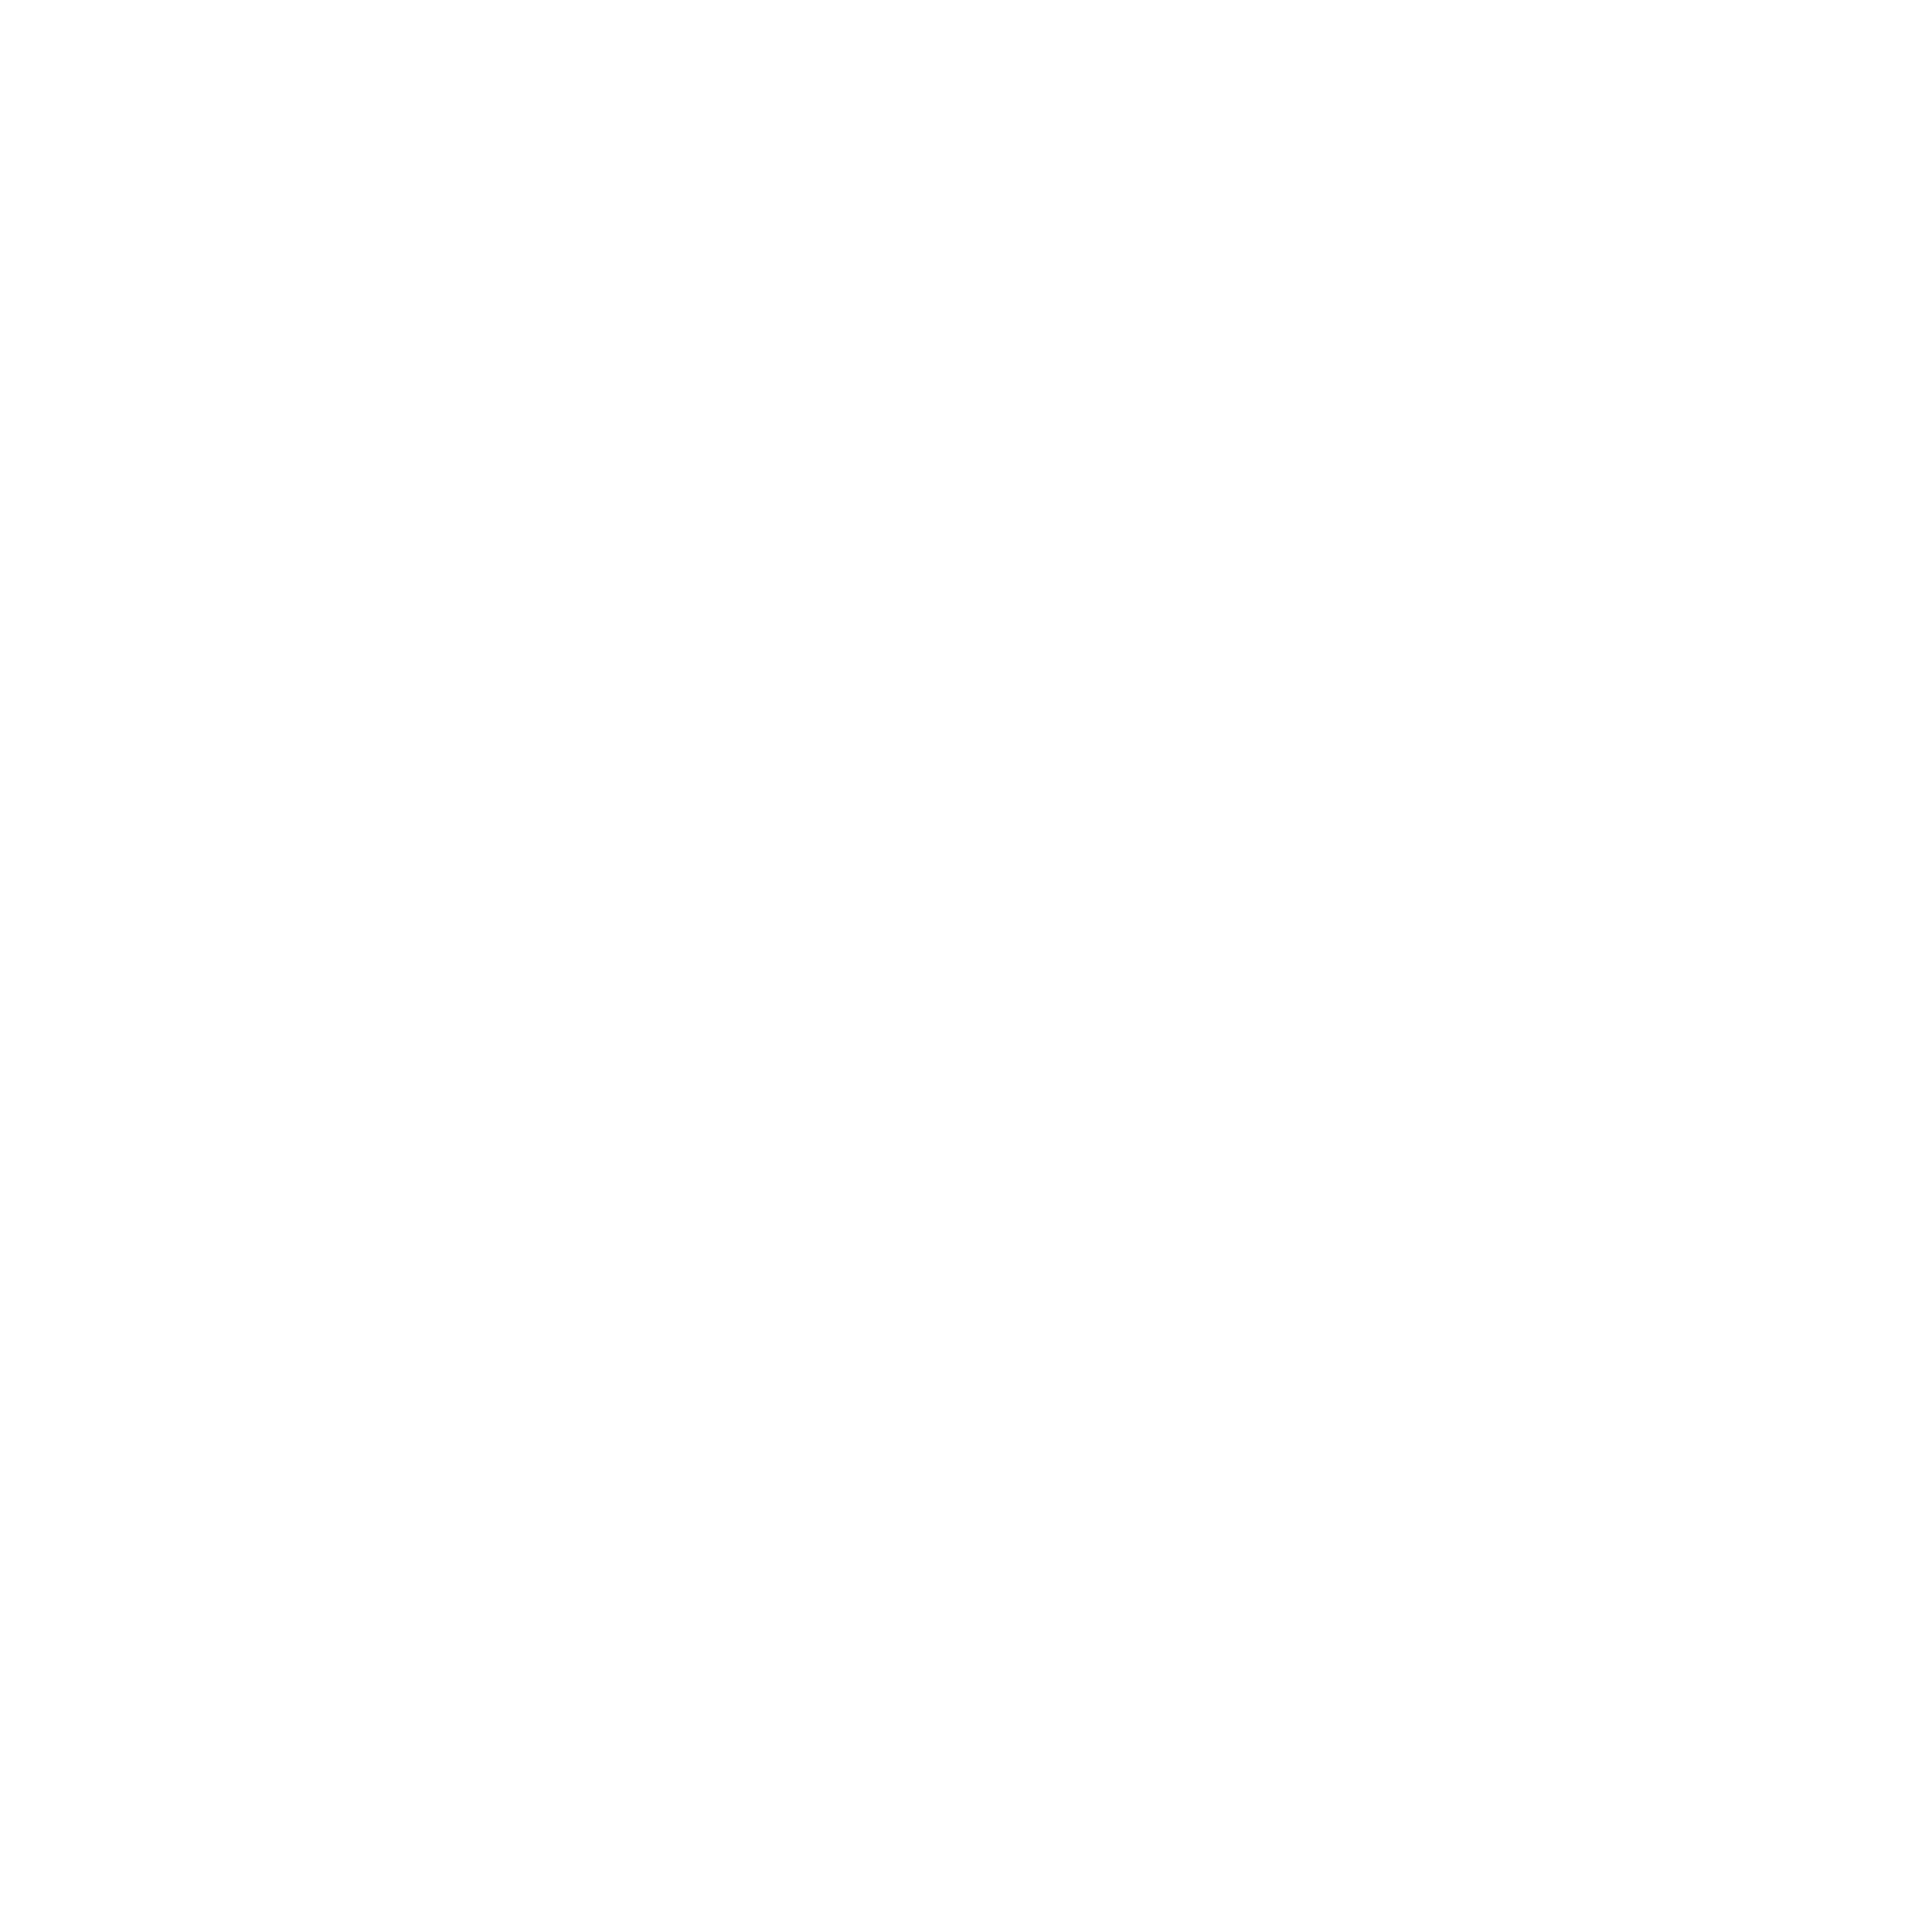 Square D Logo - Square D Logo PNG Transparent & SVG Vector - Freebie Supply